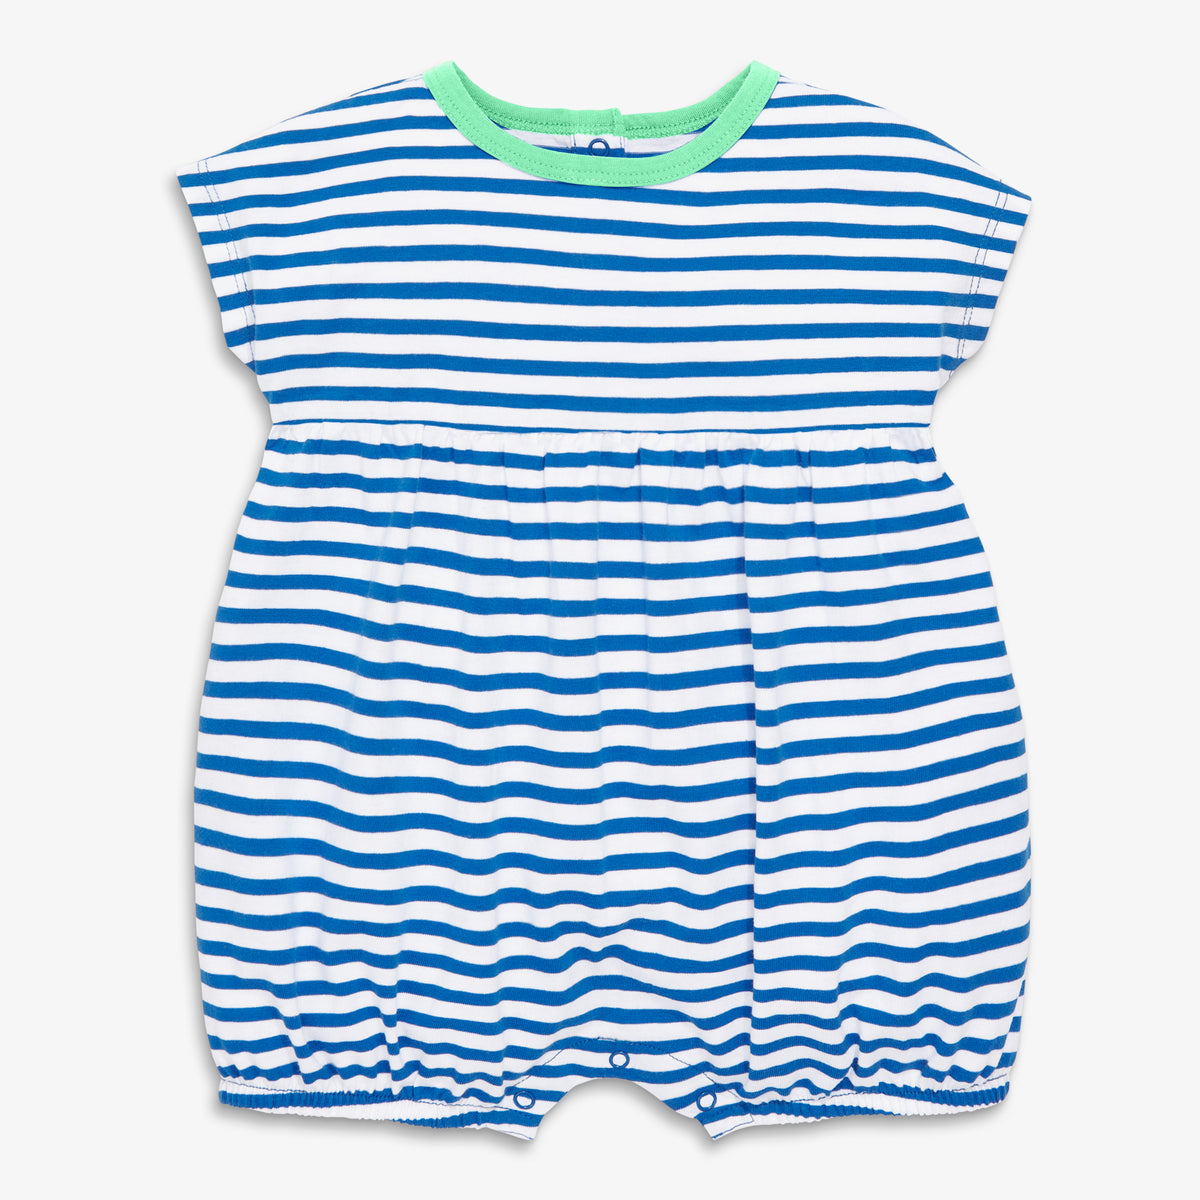 Baby bubble shortie in stripe | Primary.com